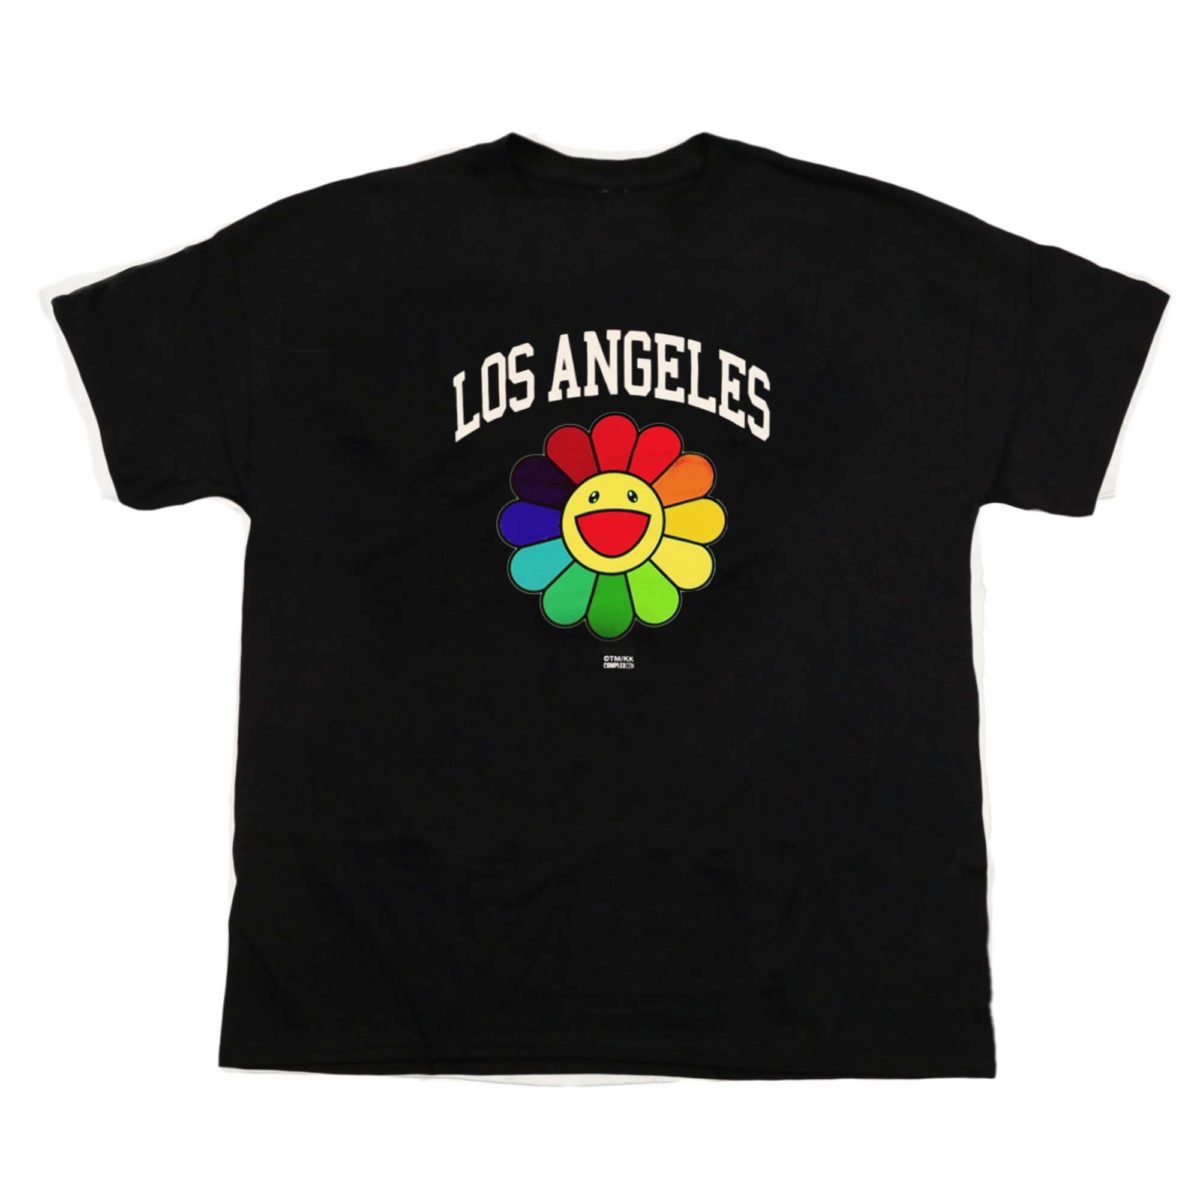 Los Angeles Flower Tee Black | Zingaro official Web